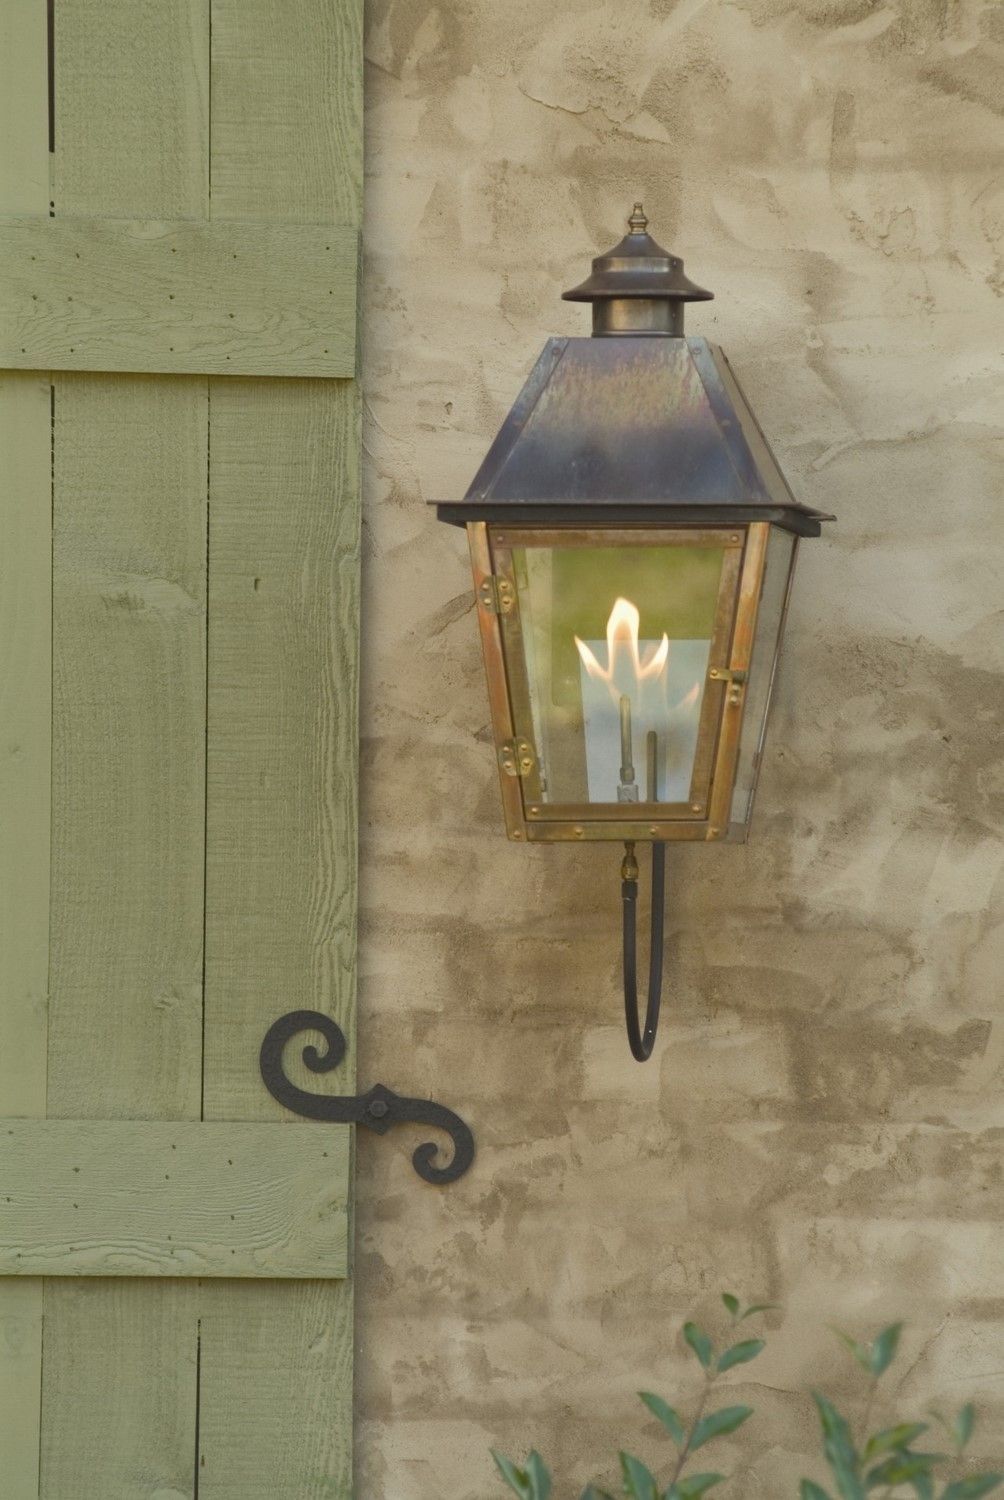 Carolina Lanterns Gas Lamp Atlas Wall Mount | Lighting | Pinterest Pertaining To Outdoor Wall Mount Gas Lights (Photo 1 of 15)